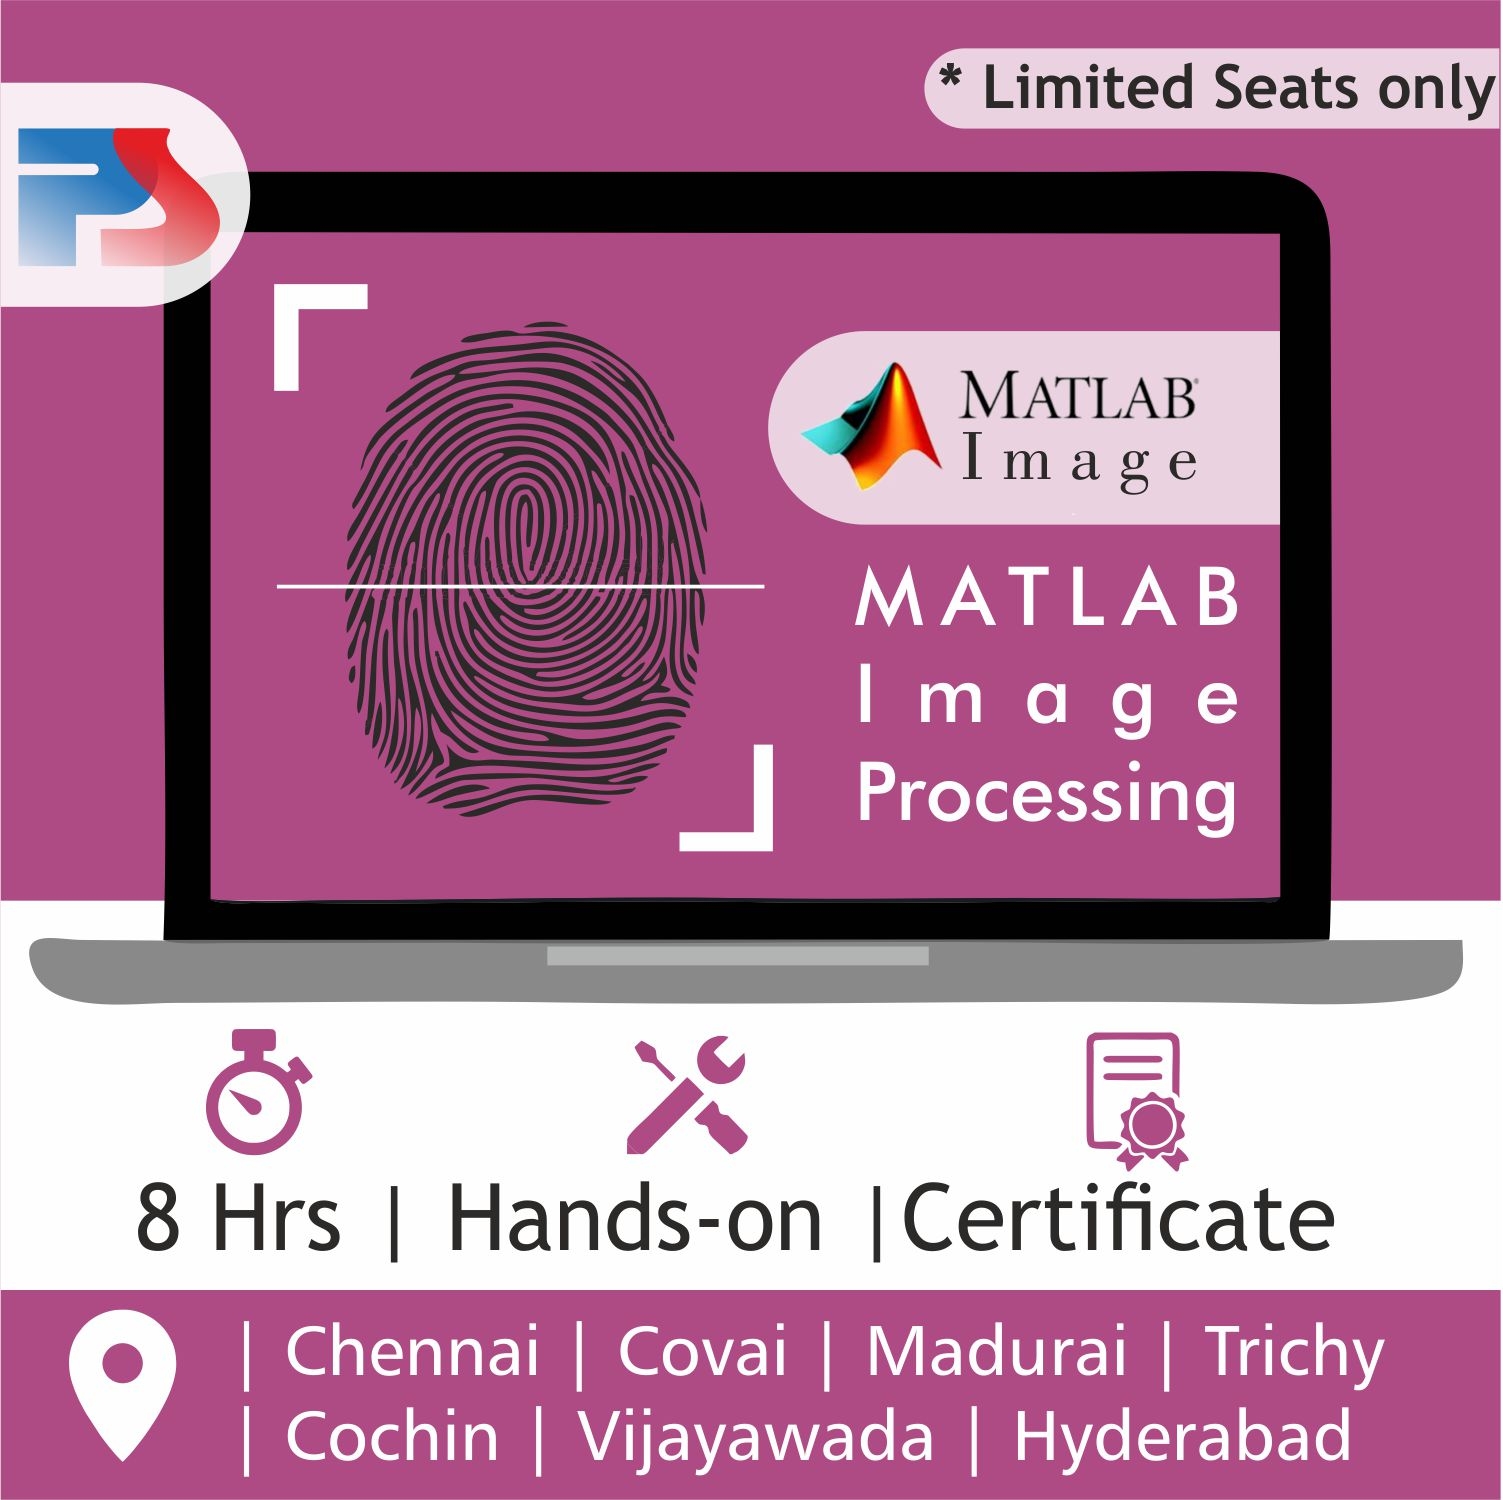 Workshop on Image Processing using Matlab